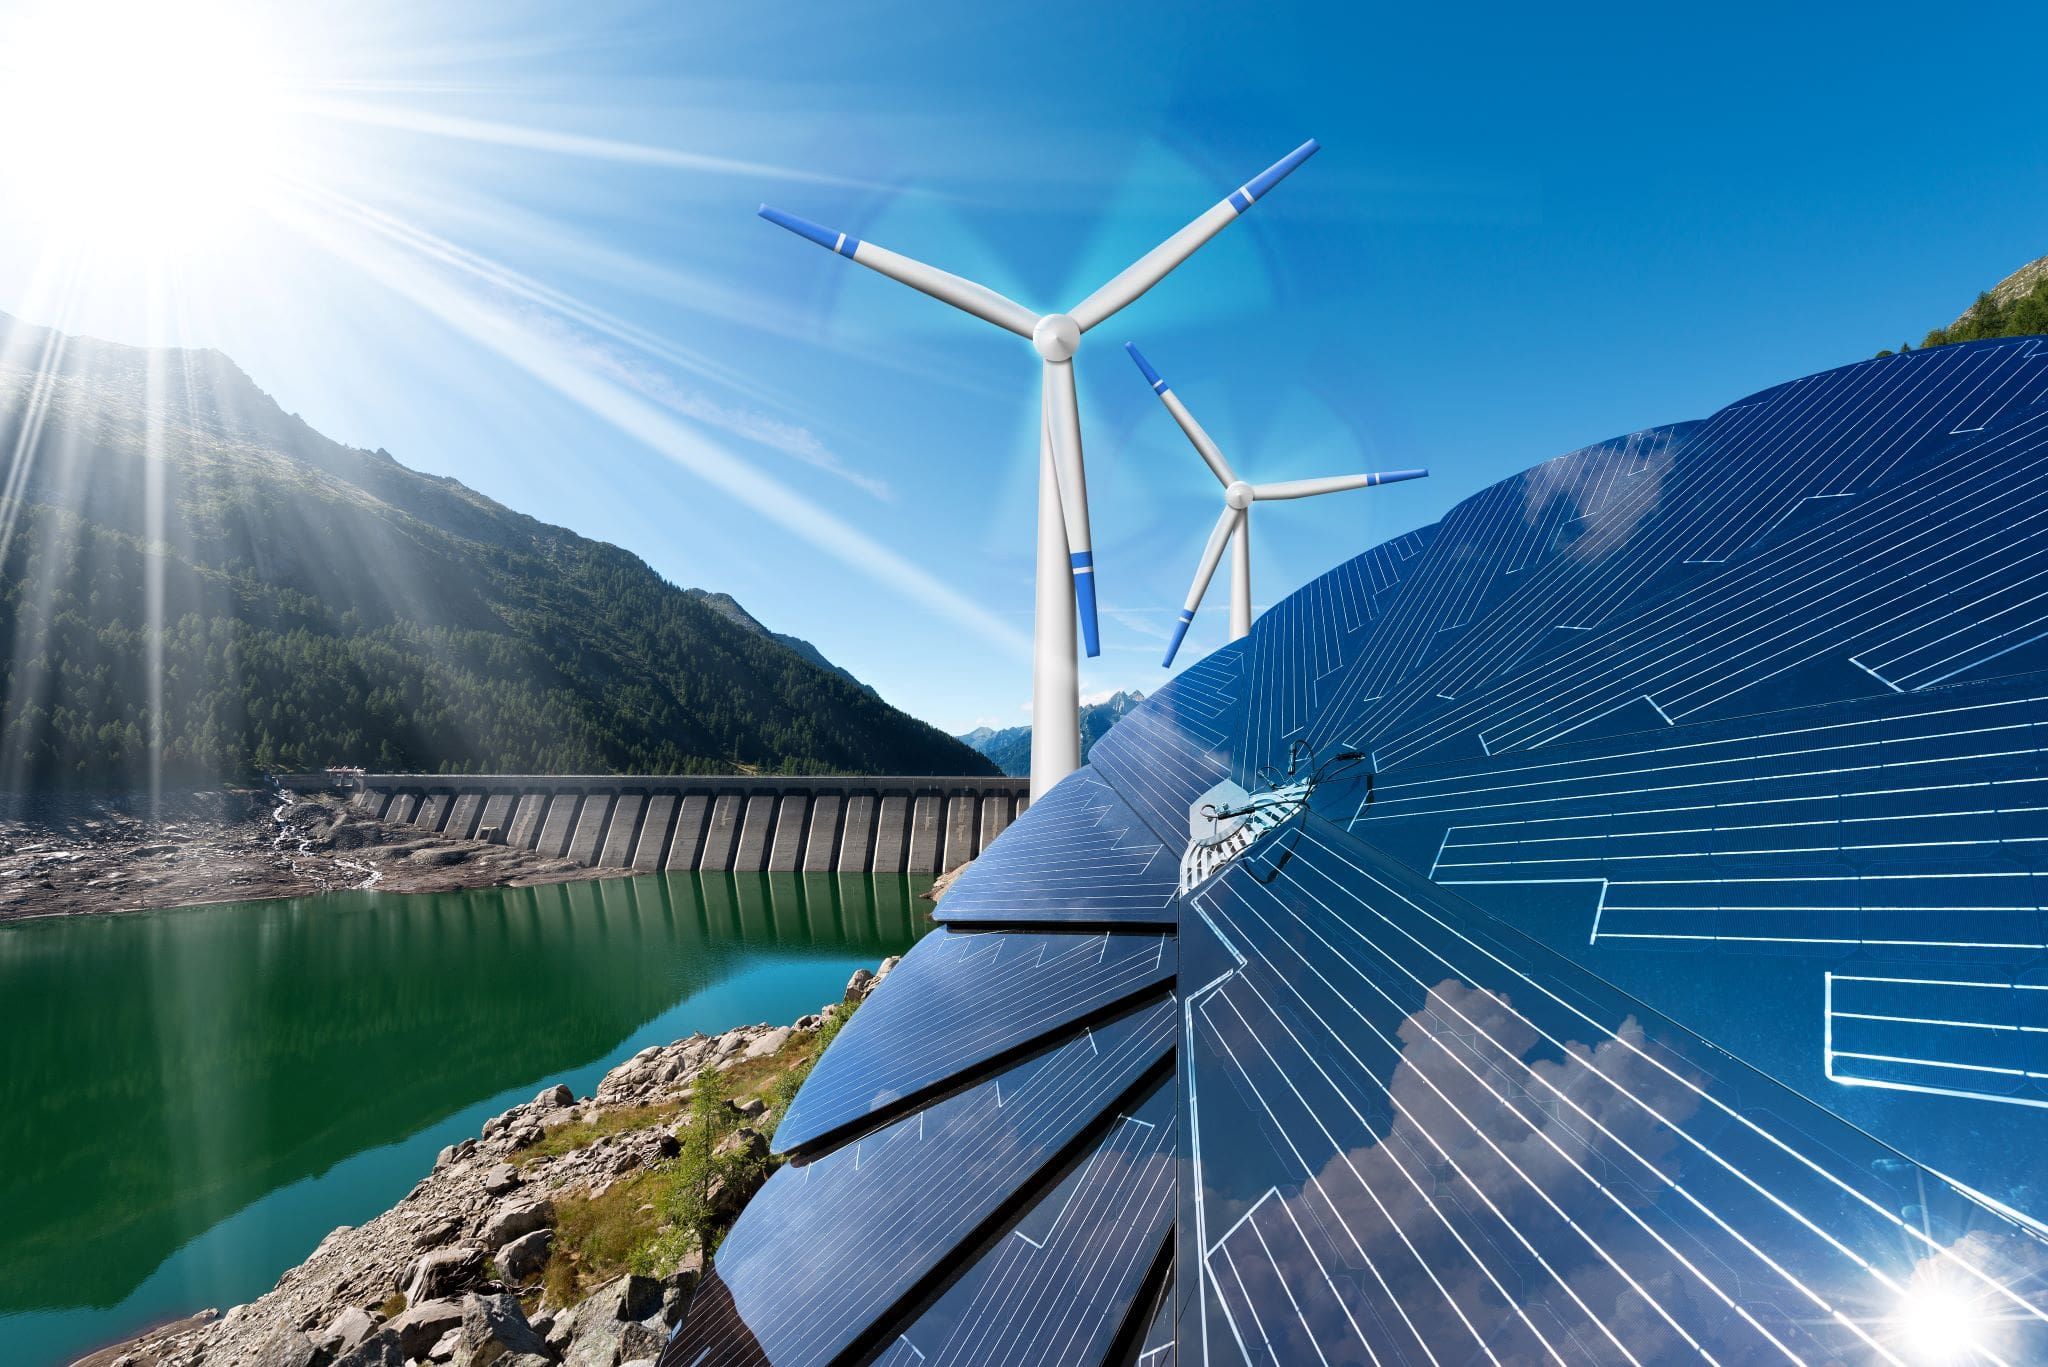 renewable energy sources - sunlight with solar panel, wind turbine, hydropower dam